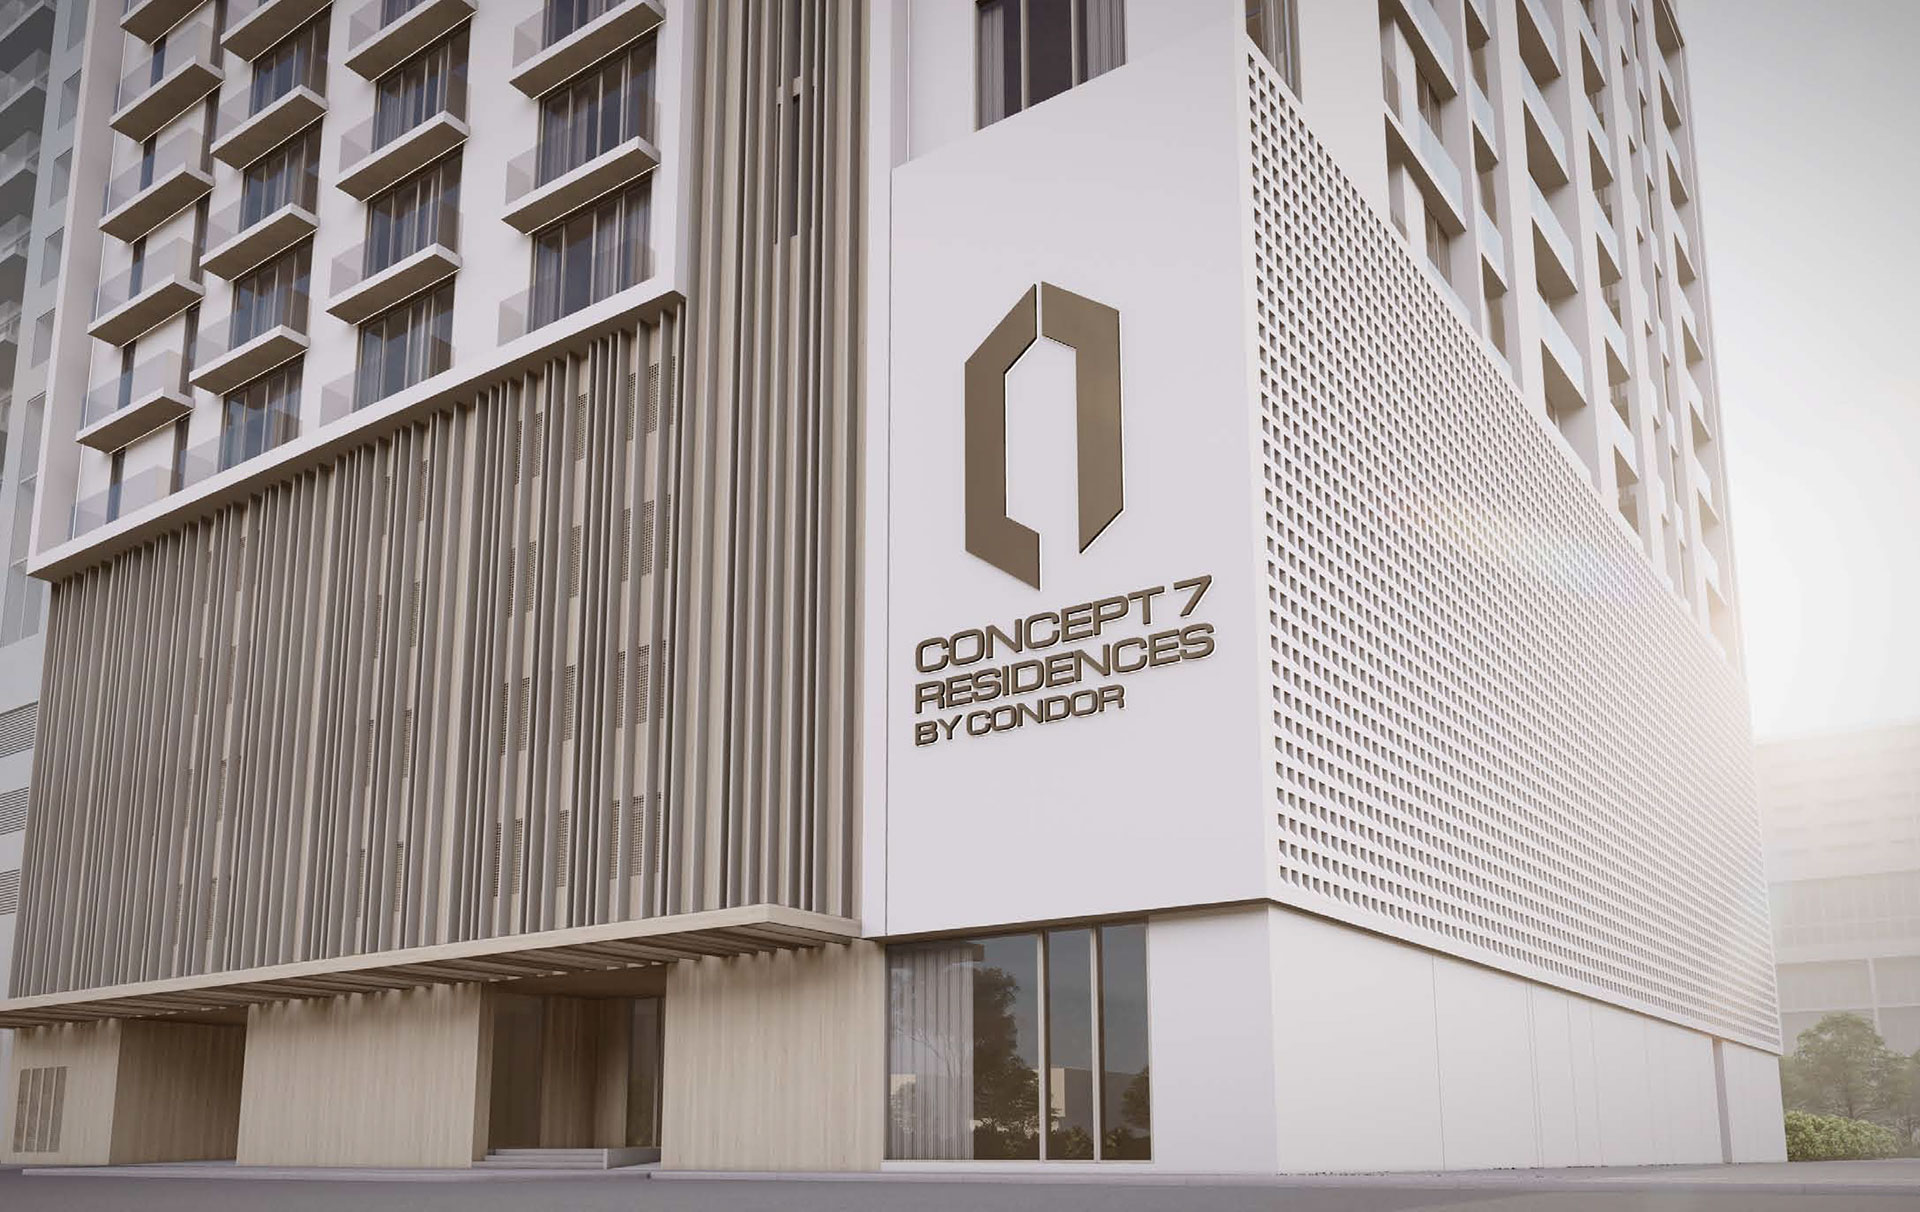 Concept 7 Residences by Condor